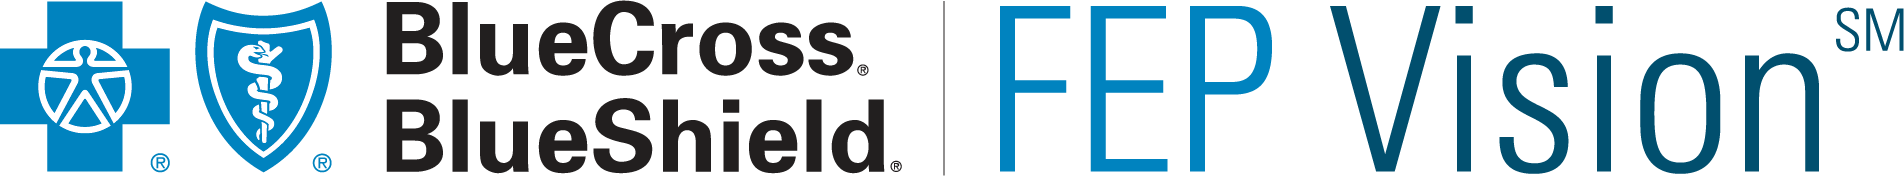 BCBS Fep Vision logo